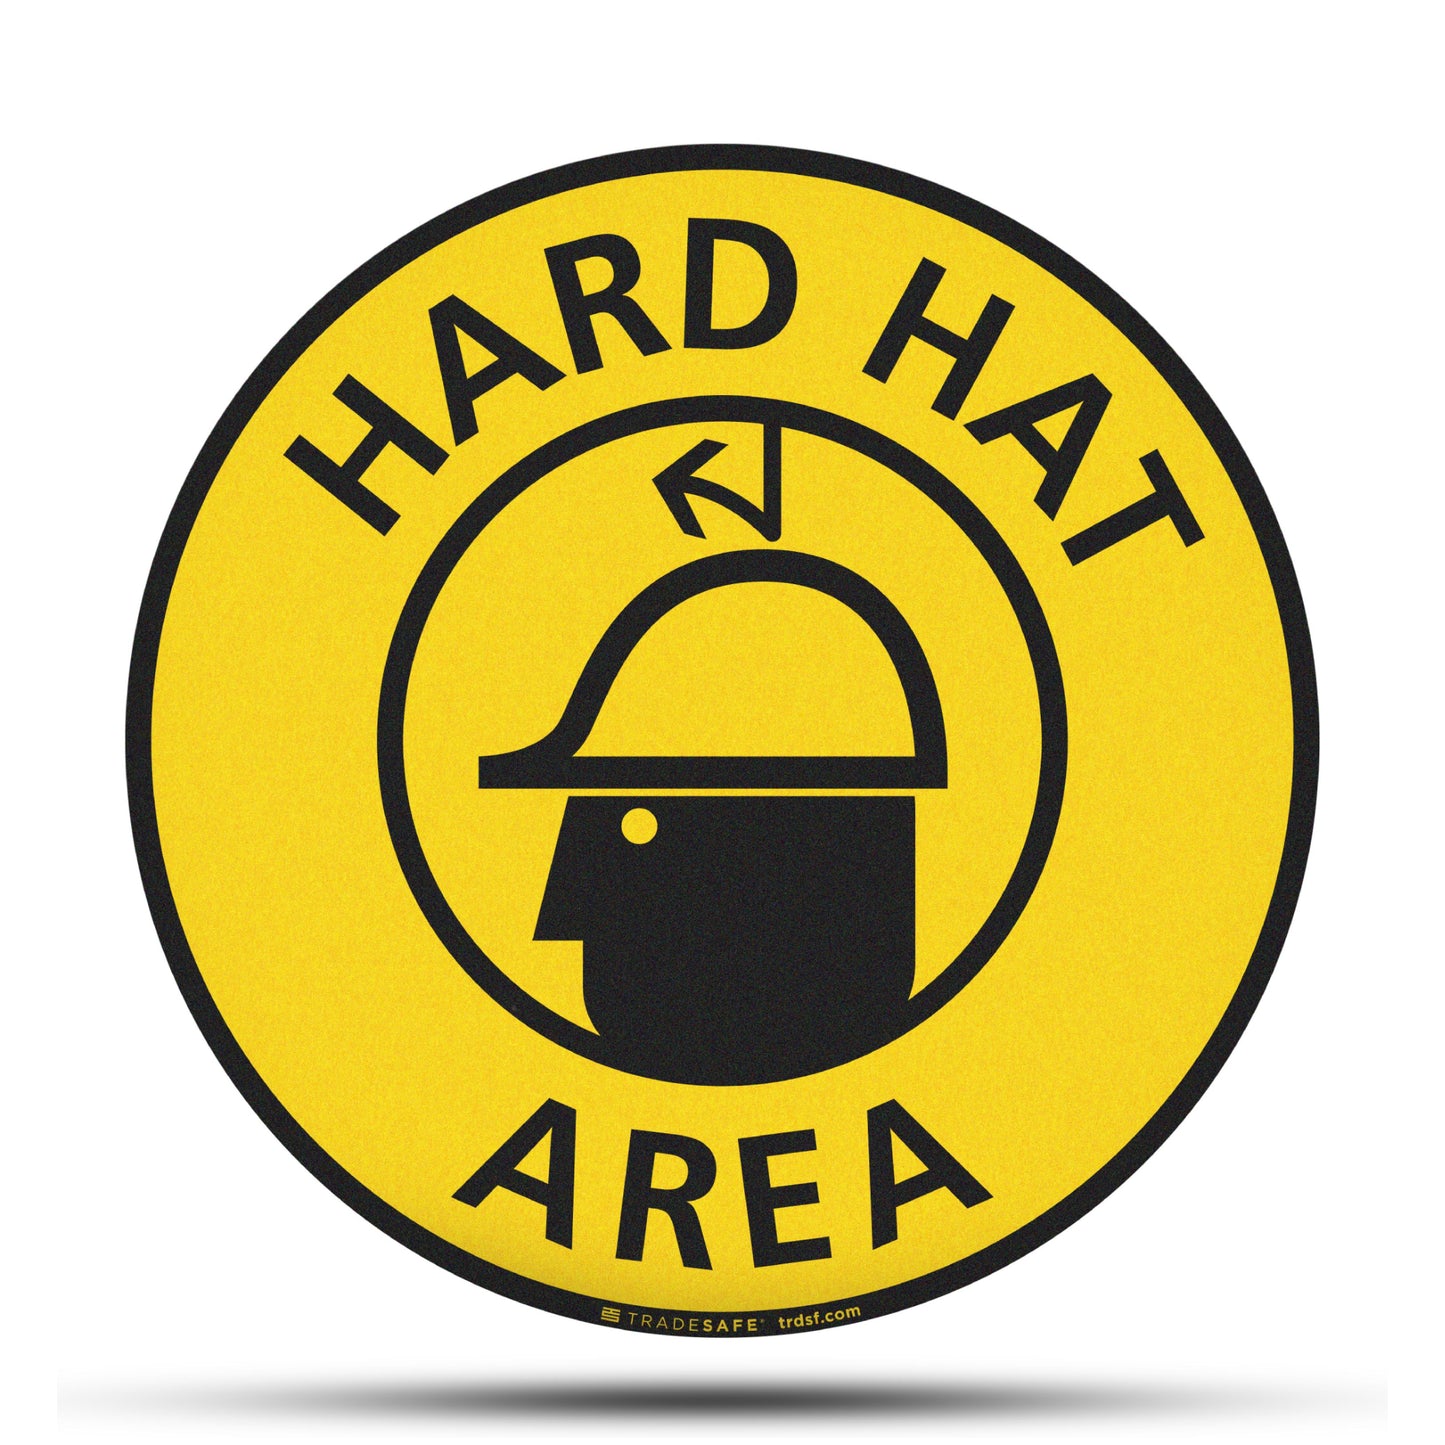 hard hat area sign vinyl sticker